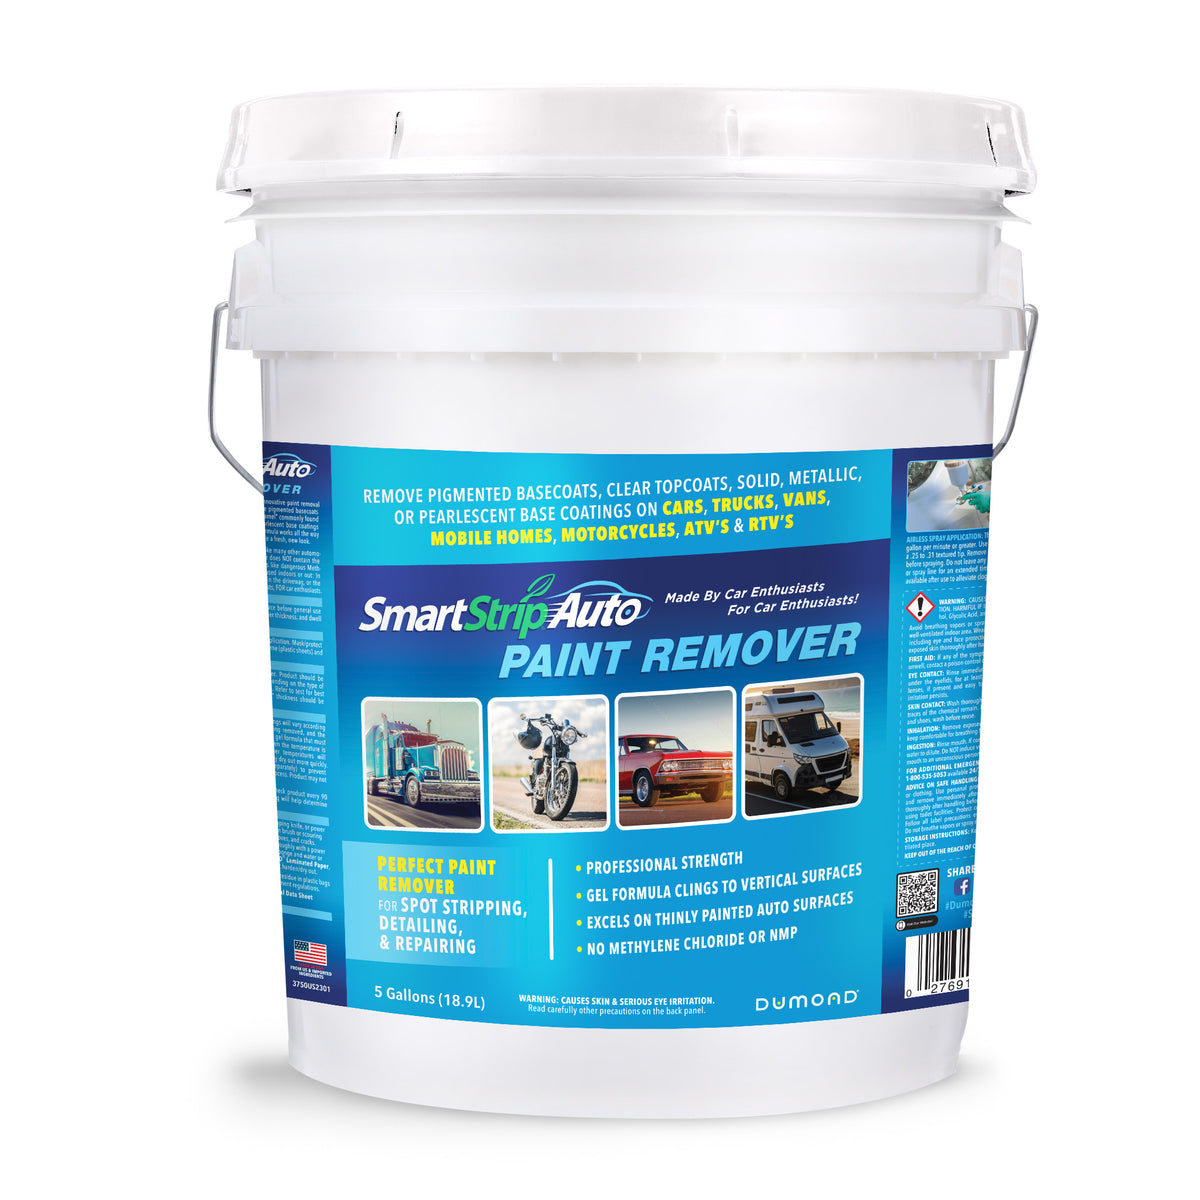 Smart 'n Easy™ Goo & Adhesive Remover - 22oz Sample – Dumond